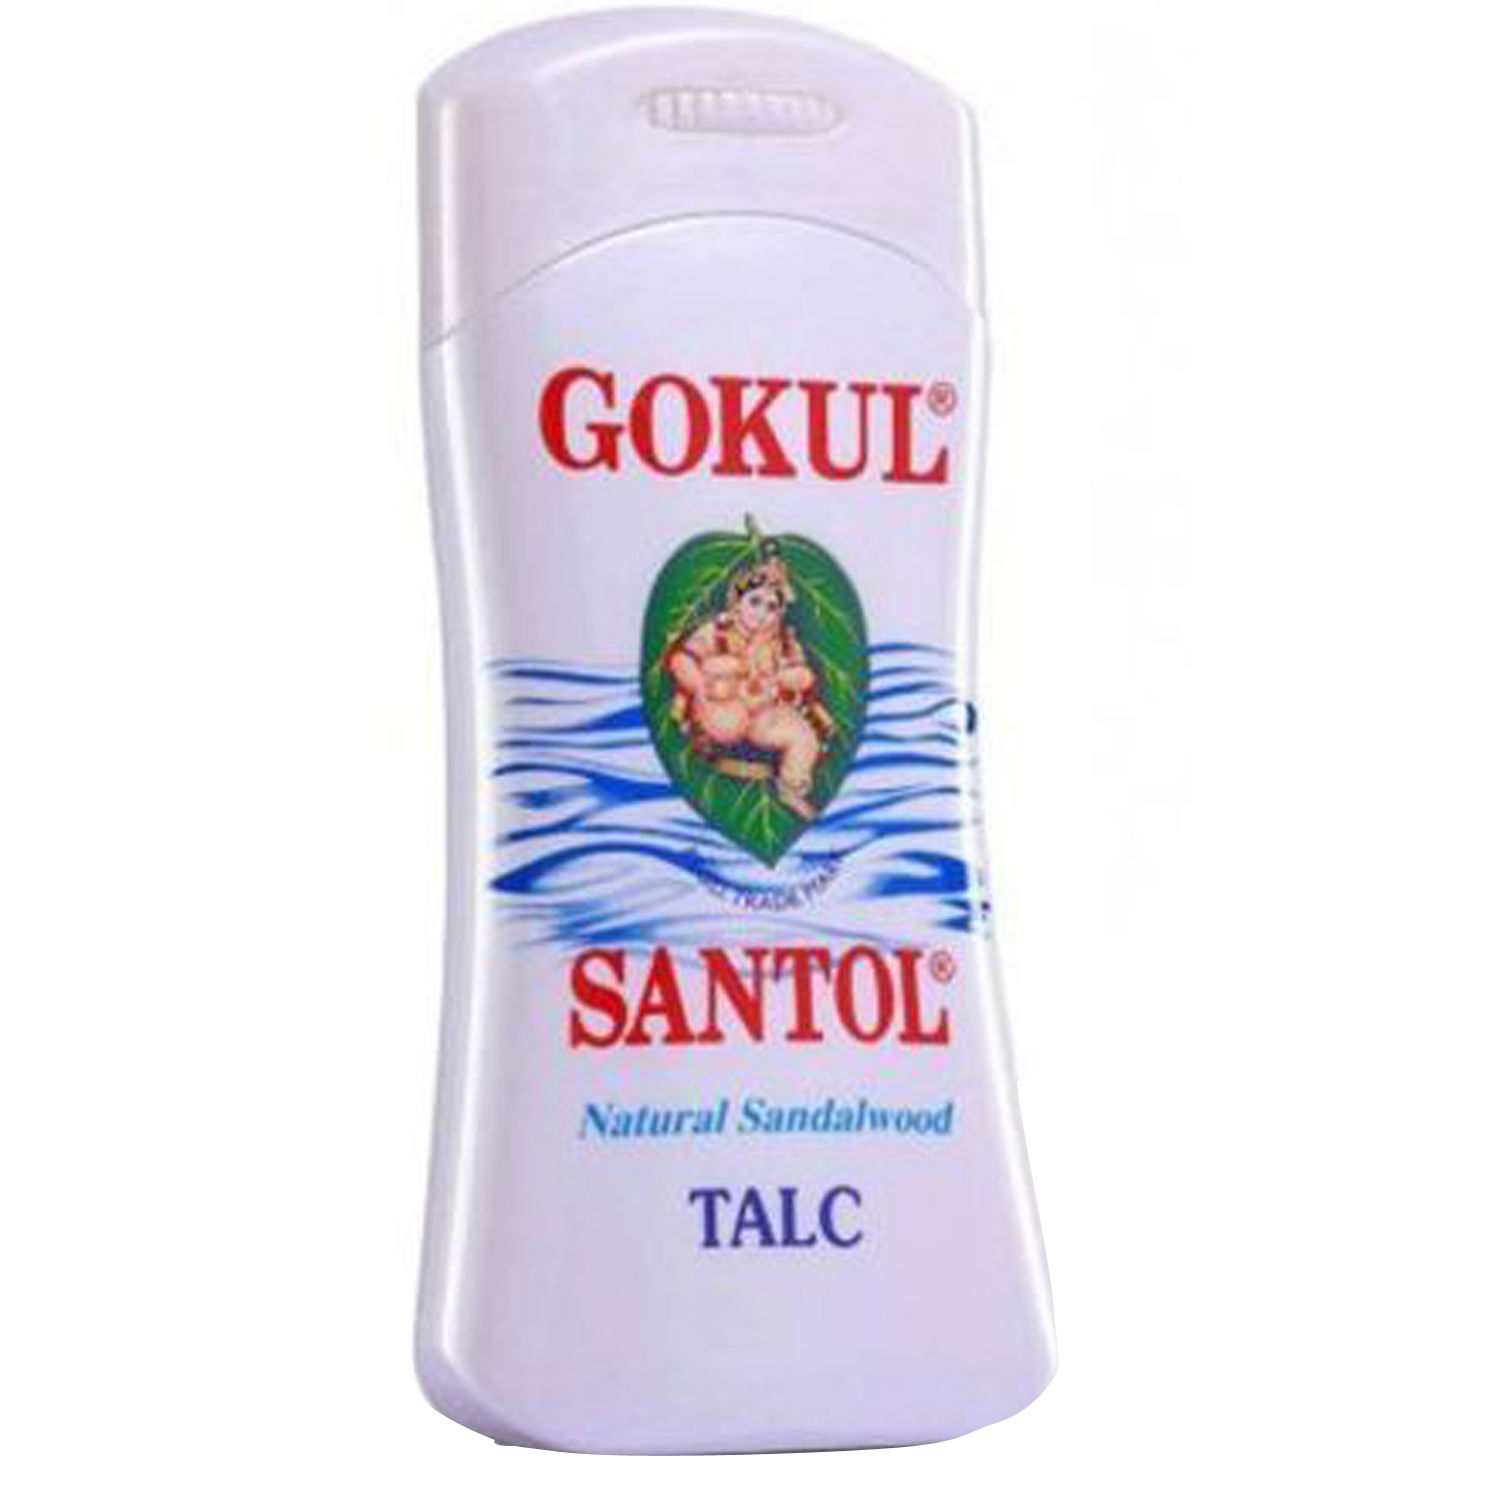 Buy Gokul Santol Sandalwood Talcum Powder, 140 gm Online